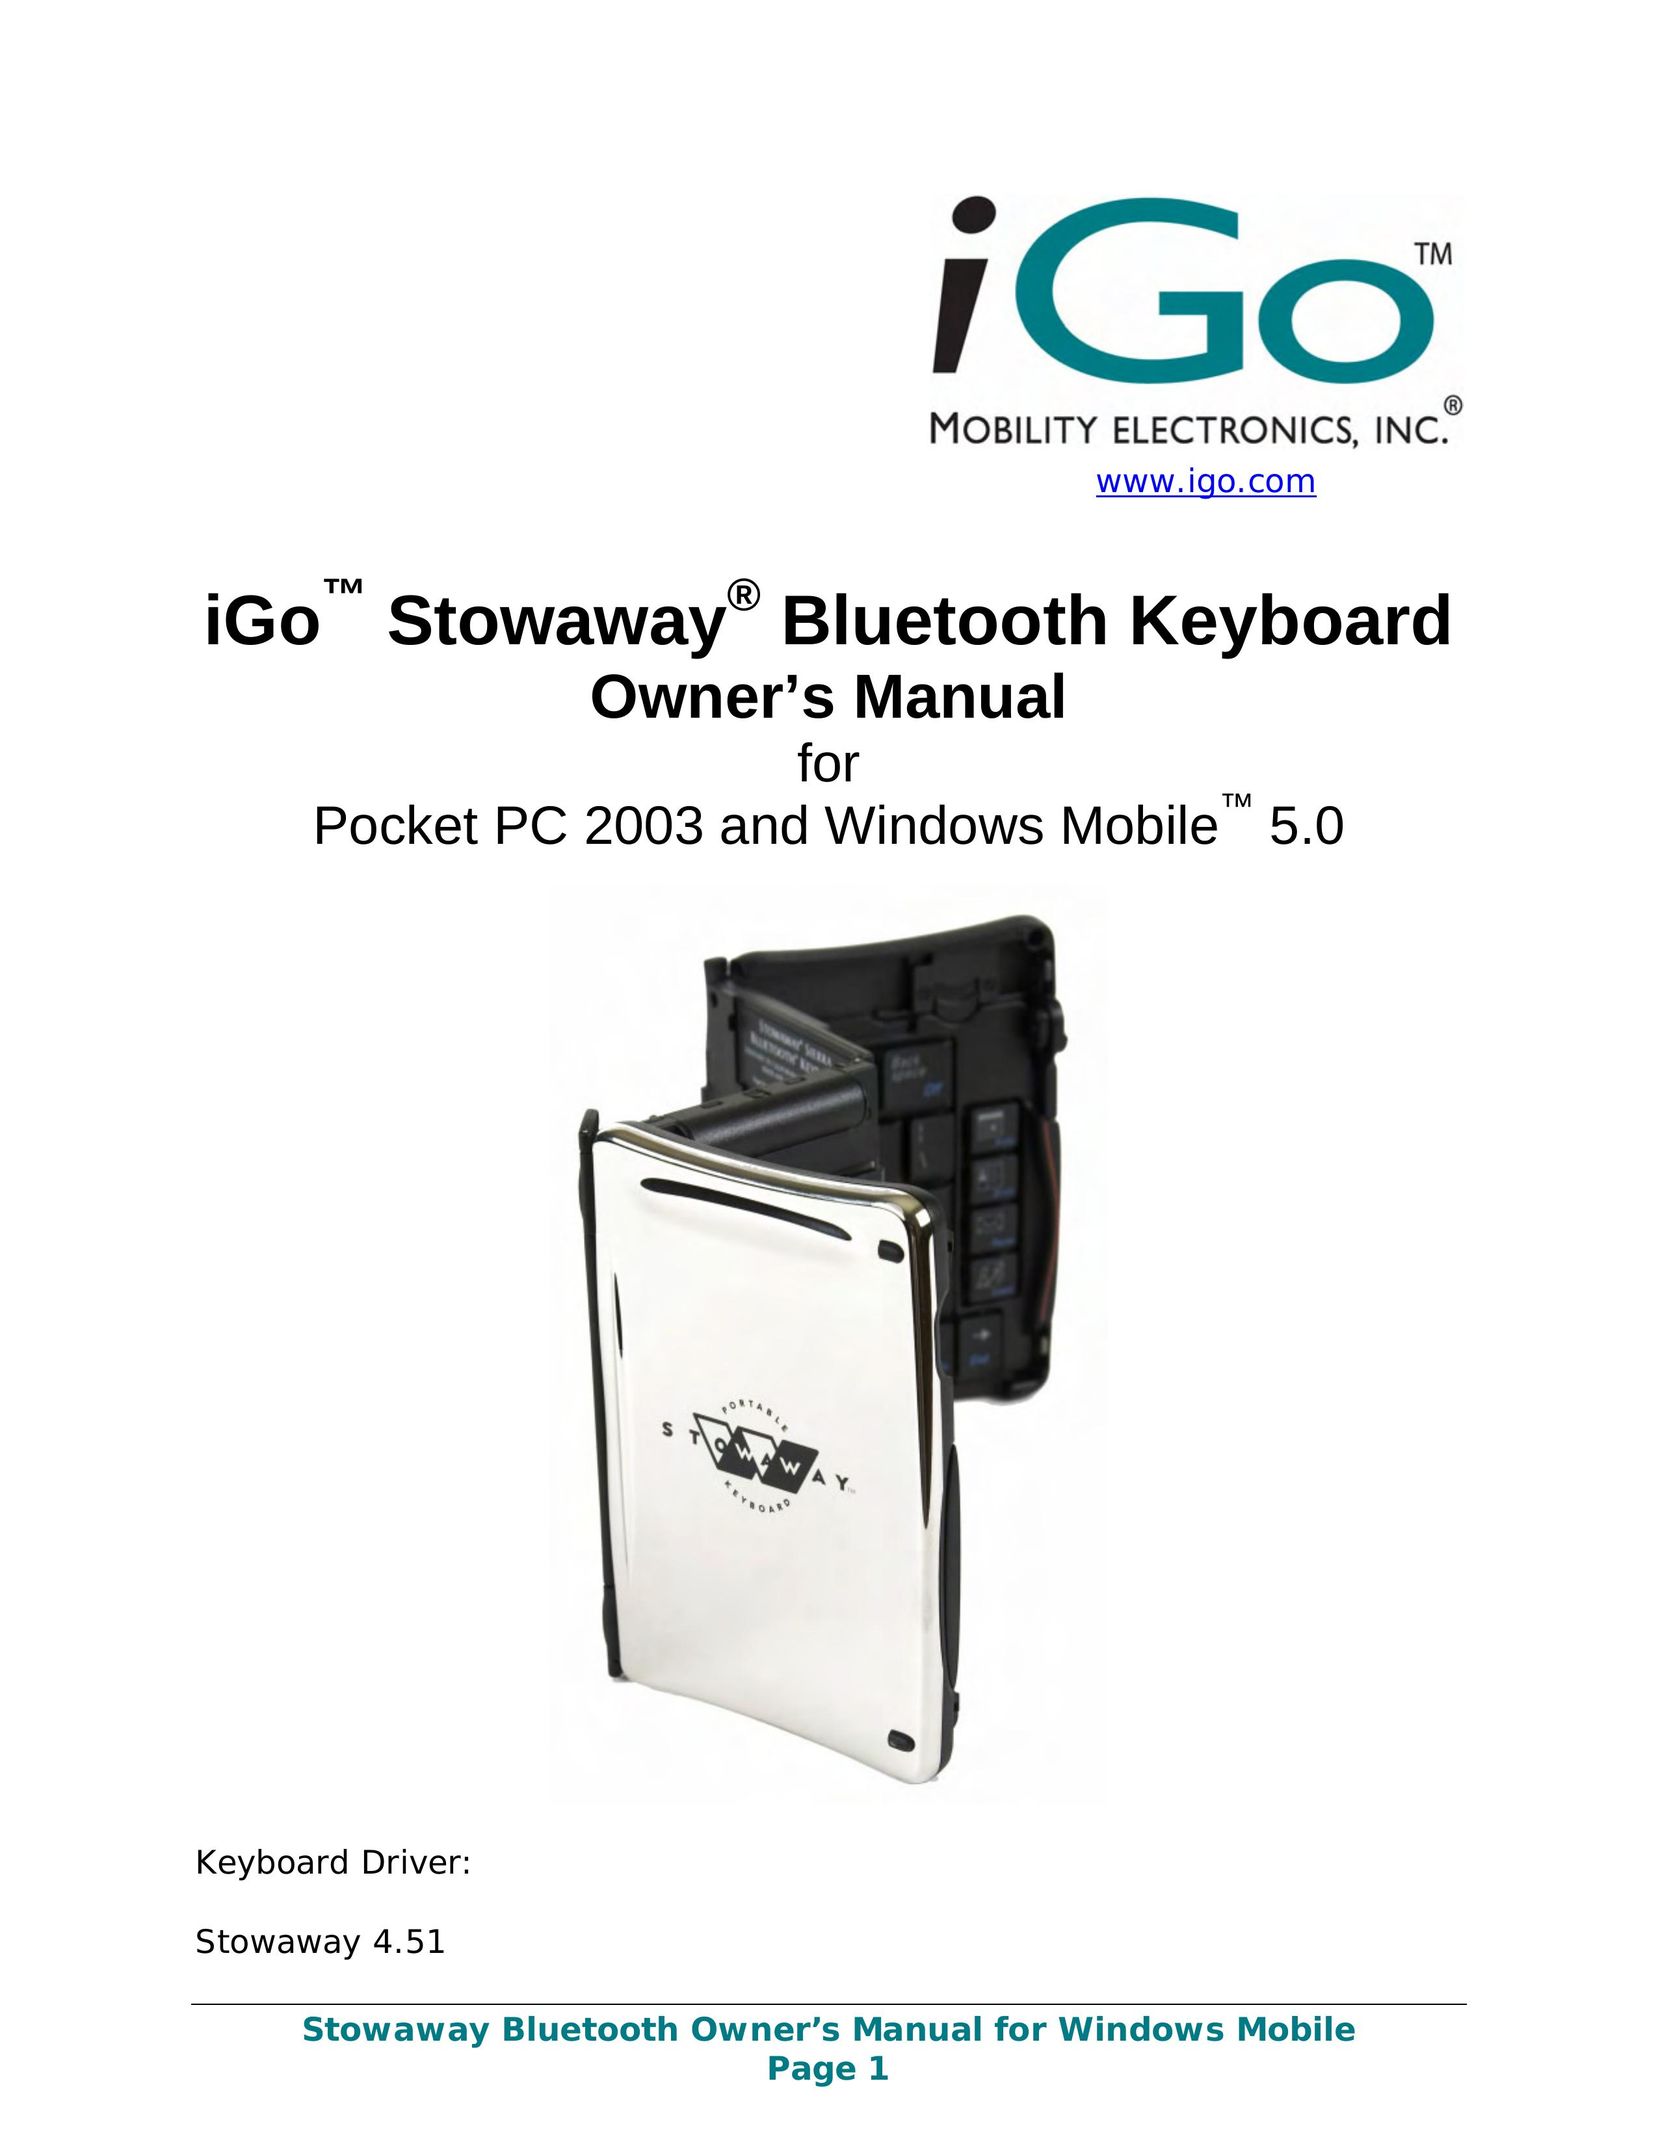 Mobility Electronics iGo Computer Keyboard User Manual